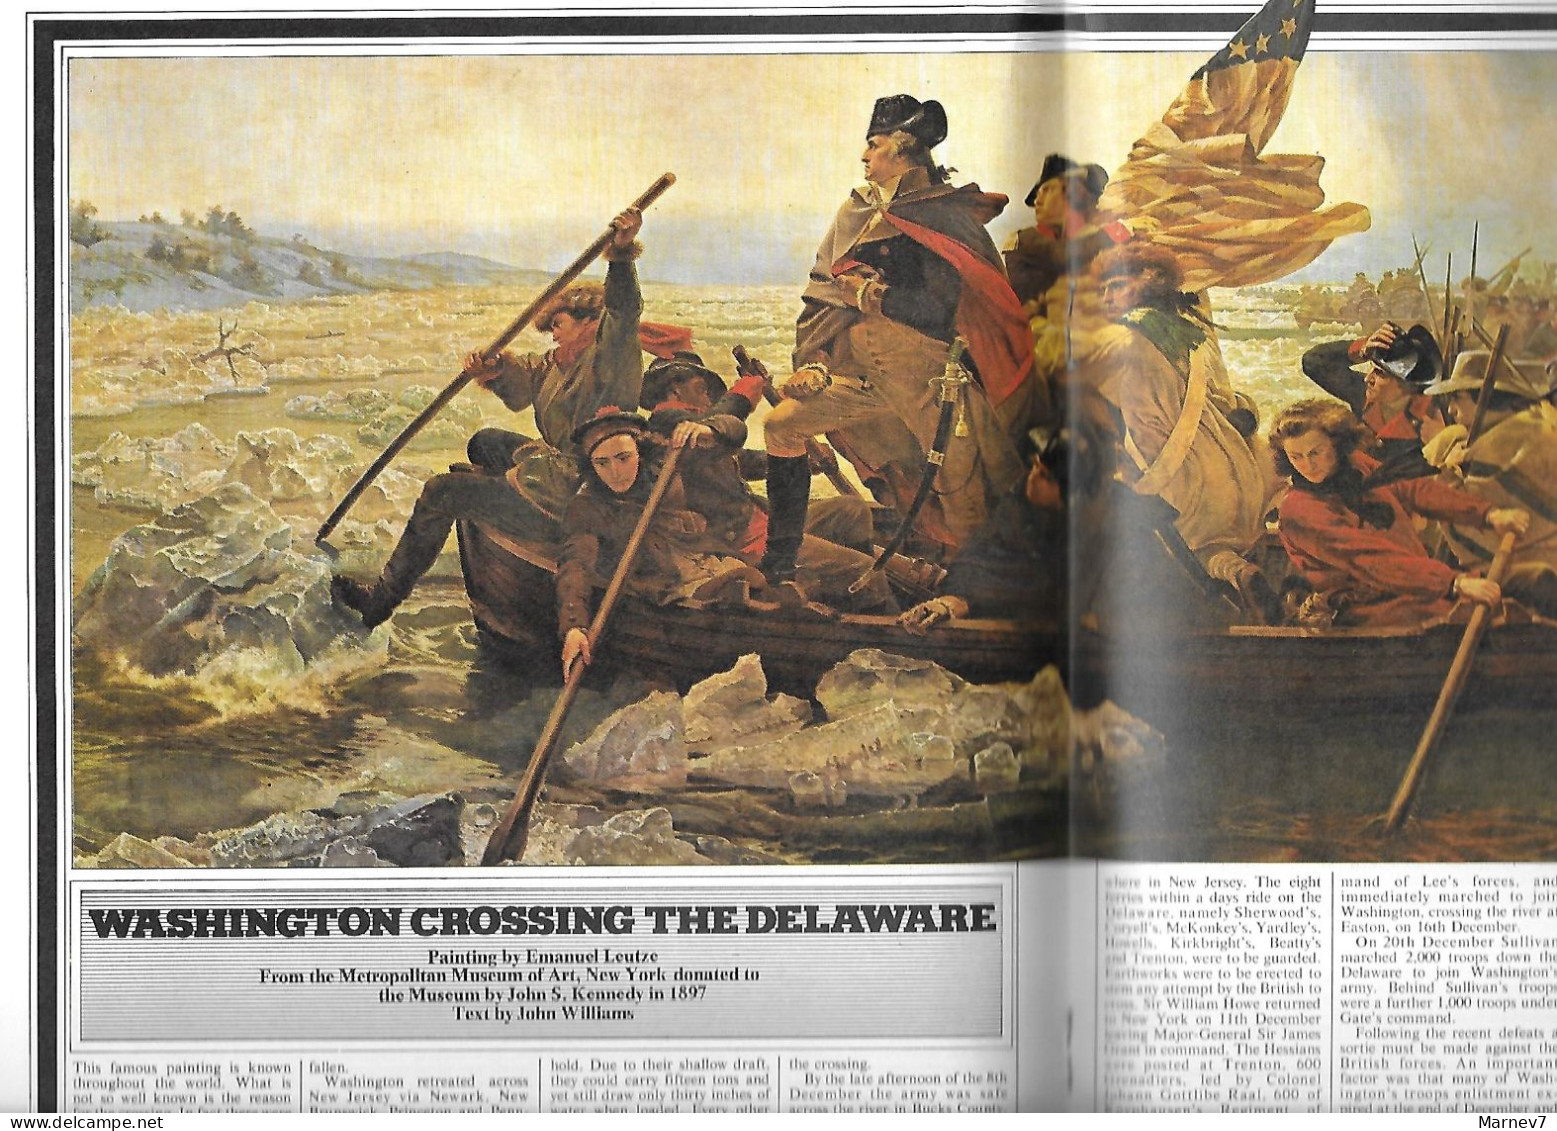 Livre Revue - American War Of Independence 1775-1783 - Guerre D'Indépendance - USA Etats-Unis - 1974 - Guerre Che Coinvolgono US